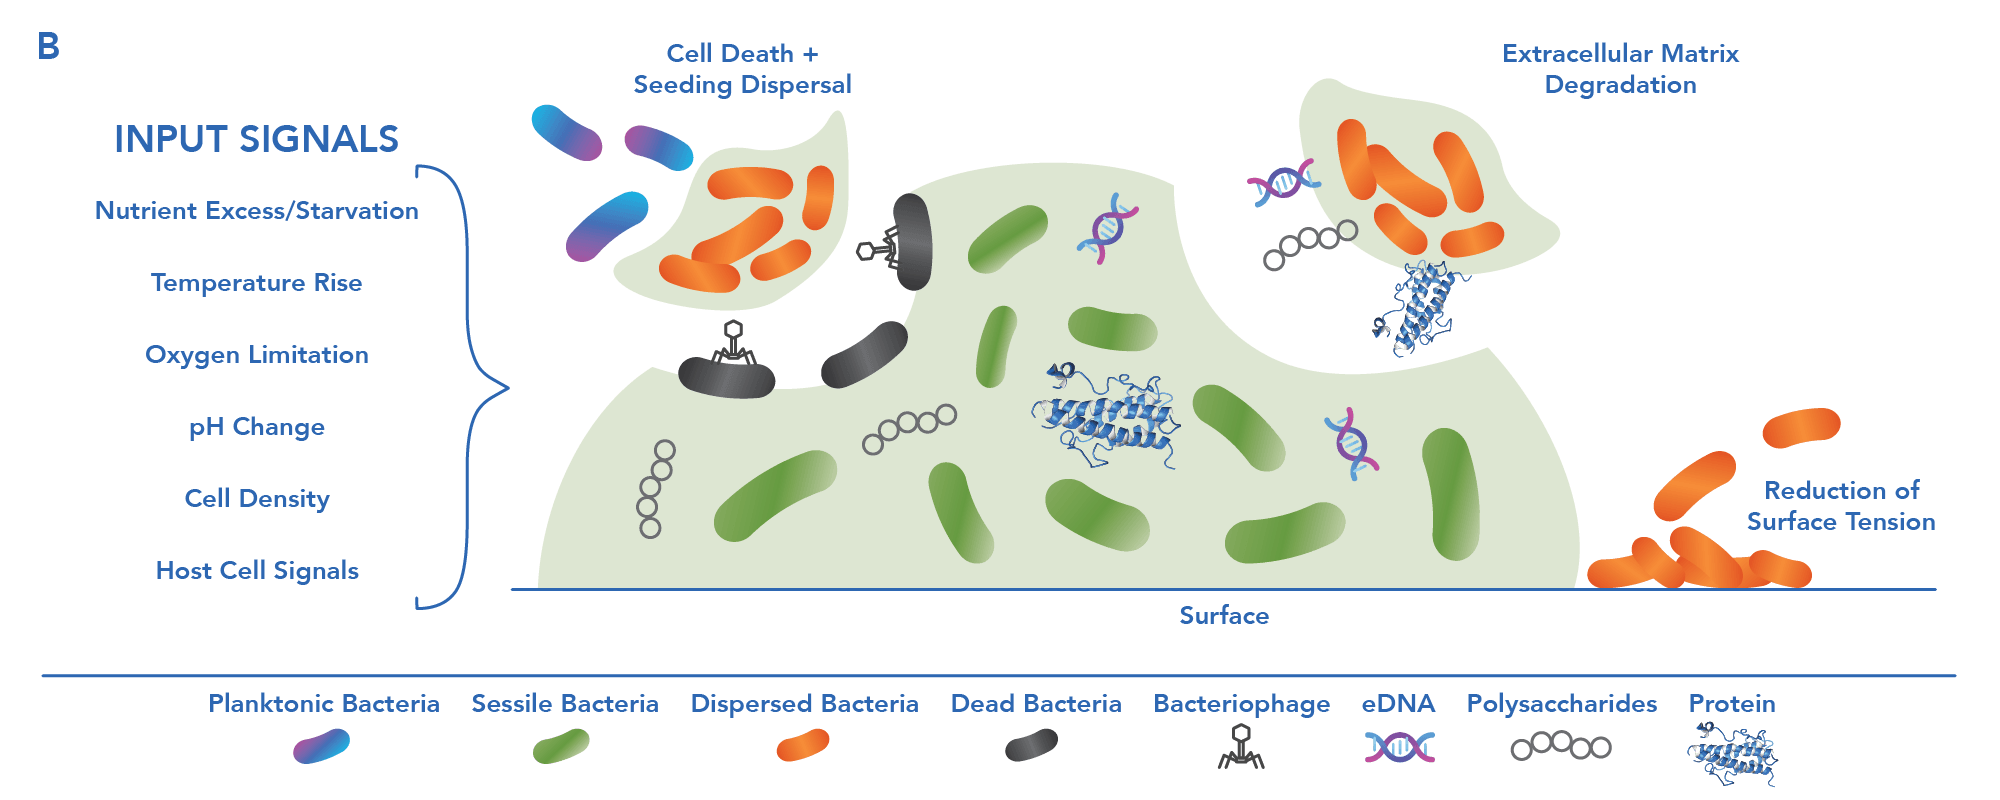 Biofilm dispersal mechanisms